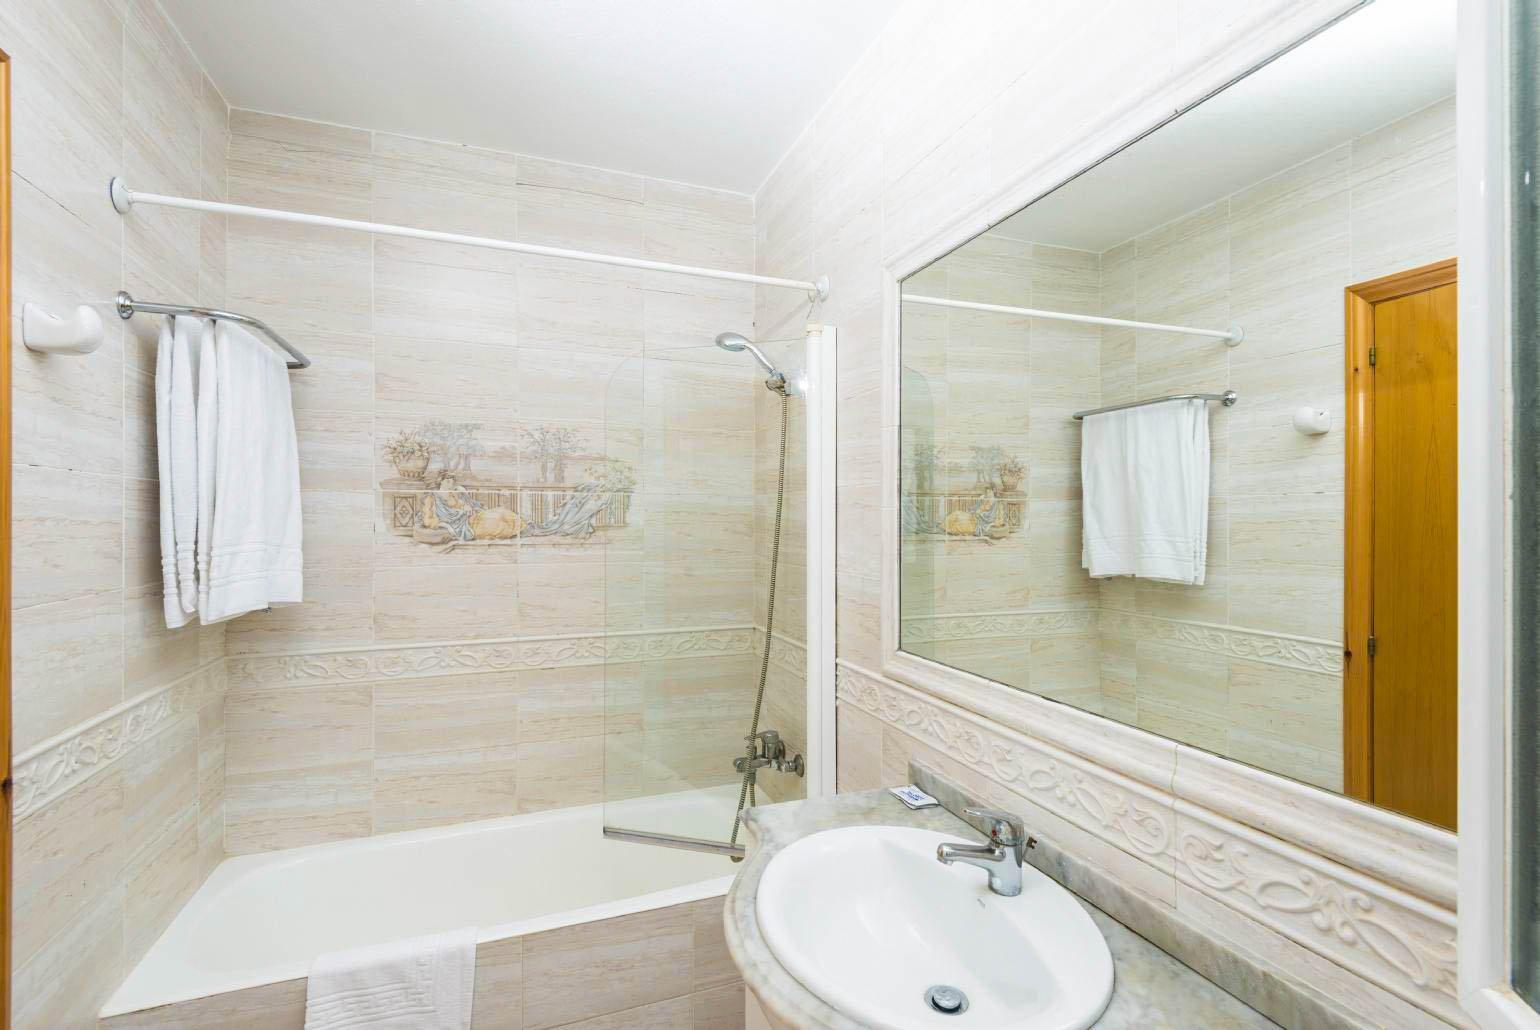 En suite bathroom with shower and bath. W/C.